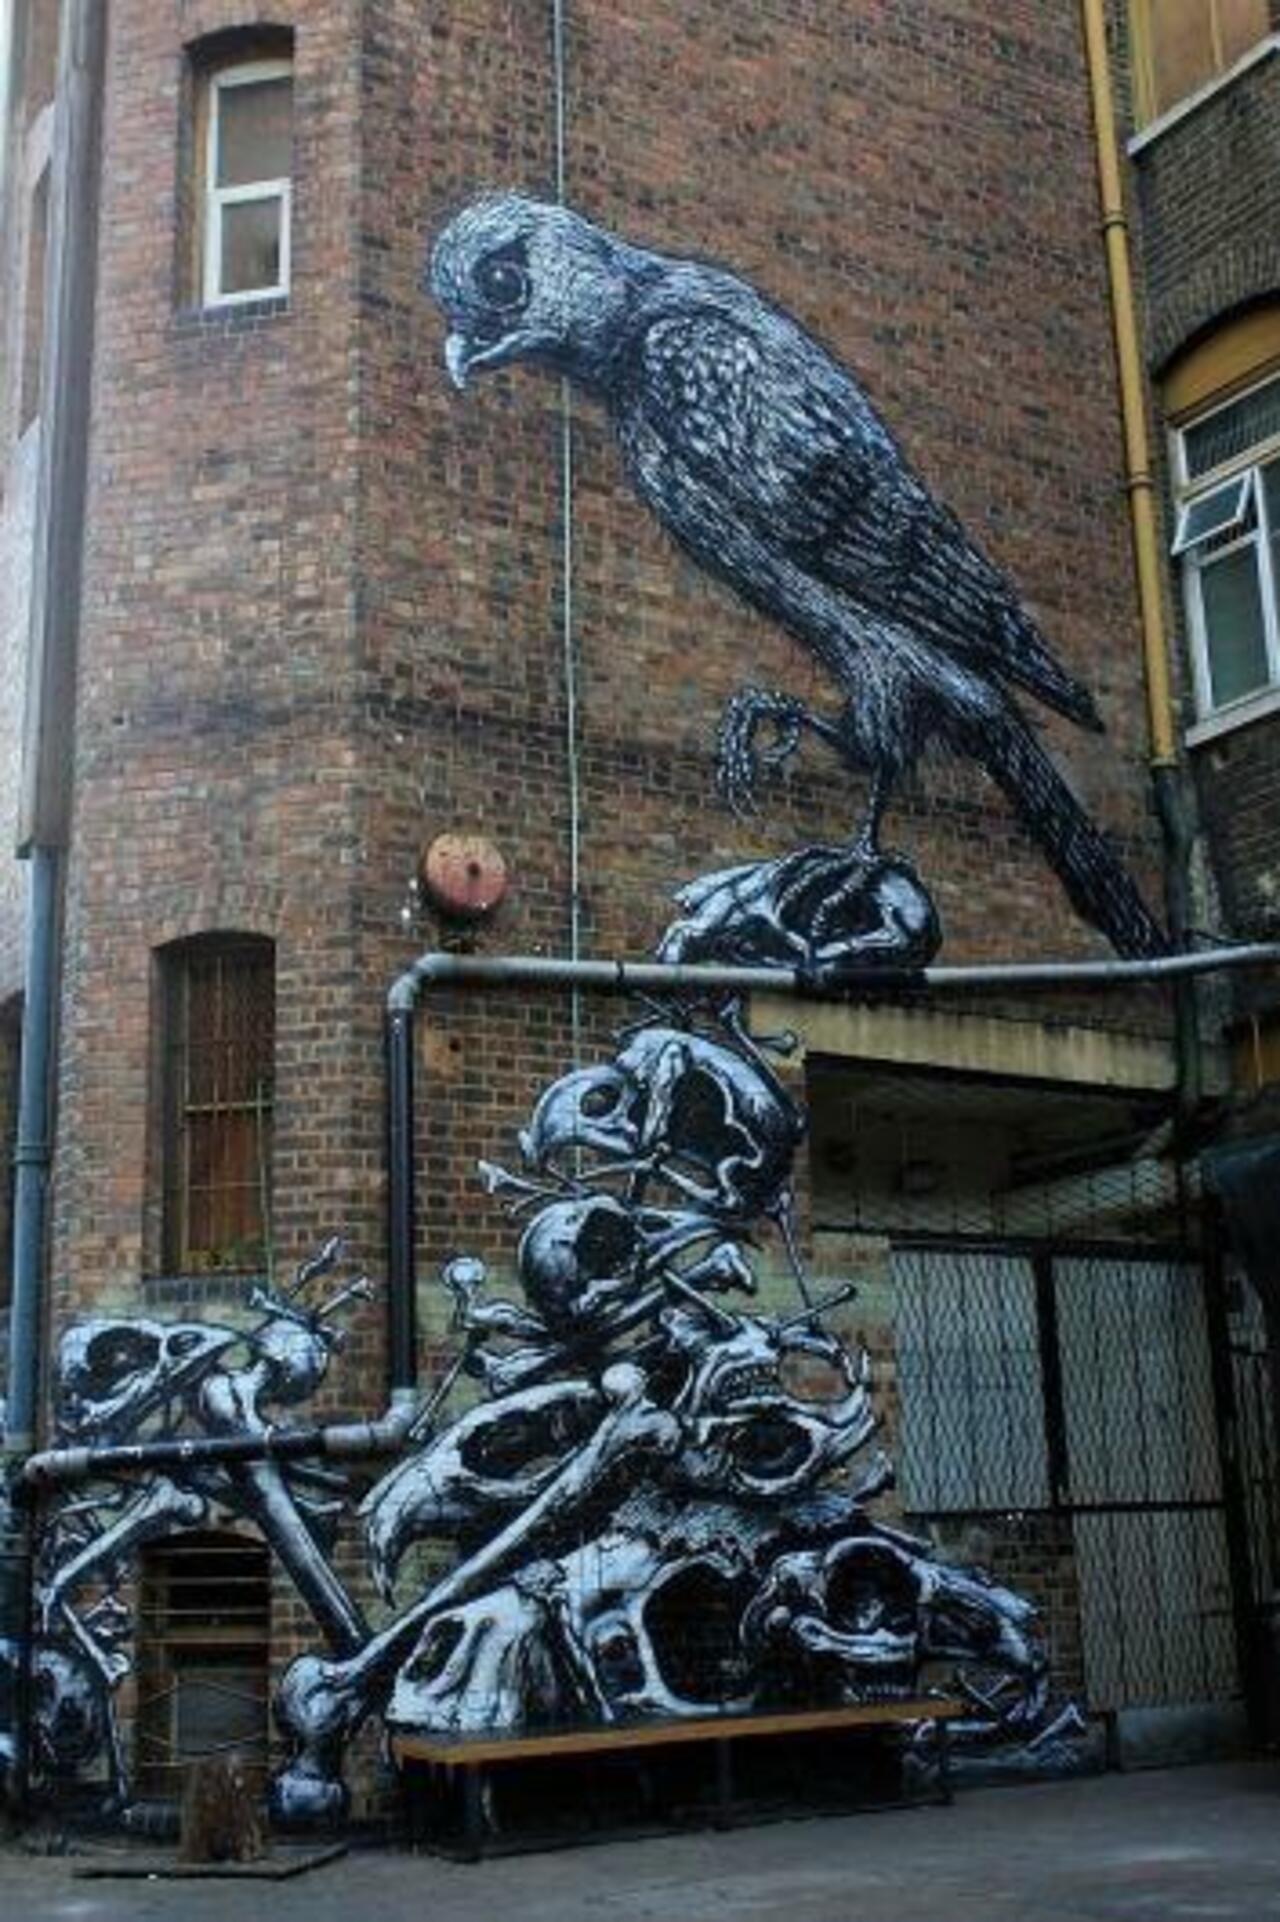 RT @oldskull: El arte de ROA y Phlegm por las calles de Londres #streetart #graffiti http://t.co/QeqL5B7XyG